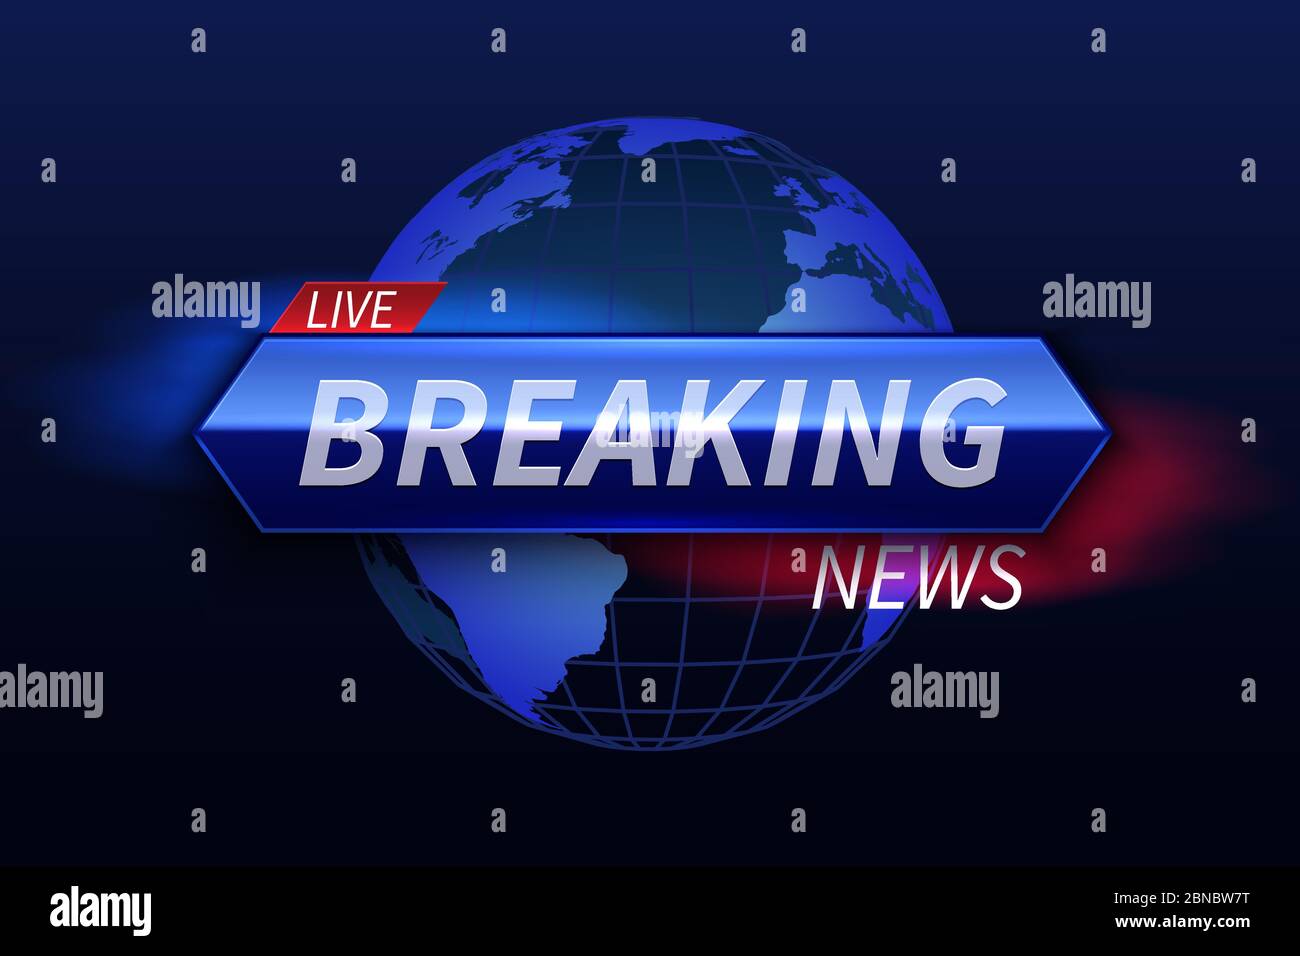 Breaking news banner. Live tv studio headline. Broadcast show vector graphics. Illustration of broadcast channel tv, world news broadcasting Stock Vector